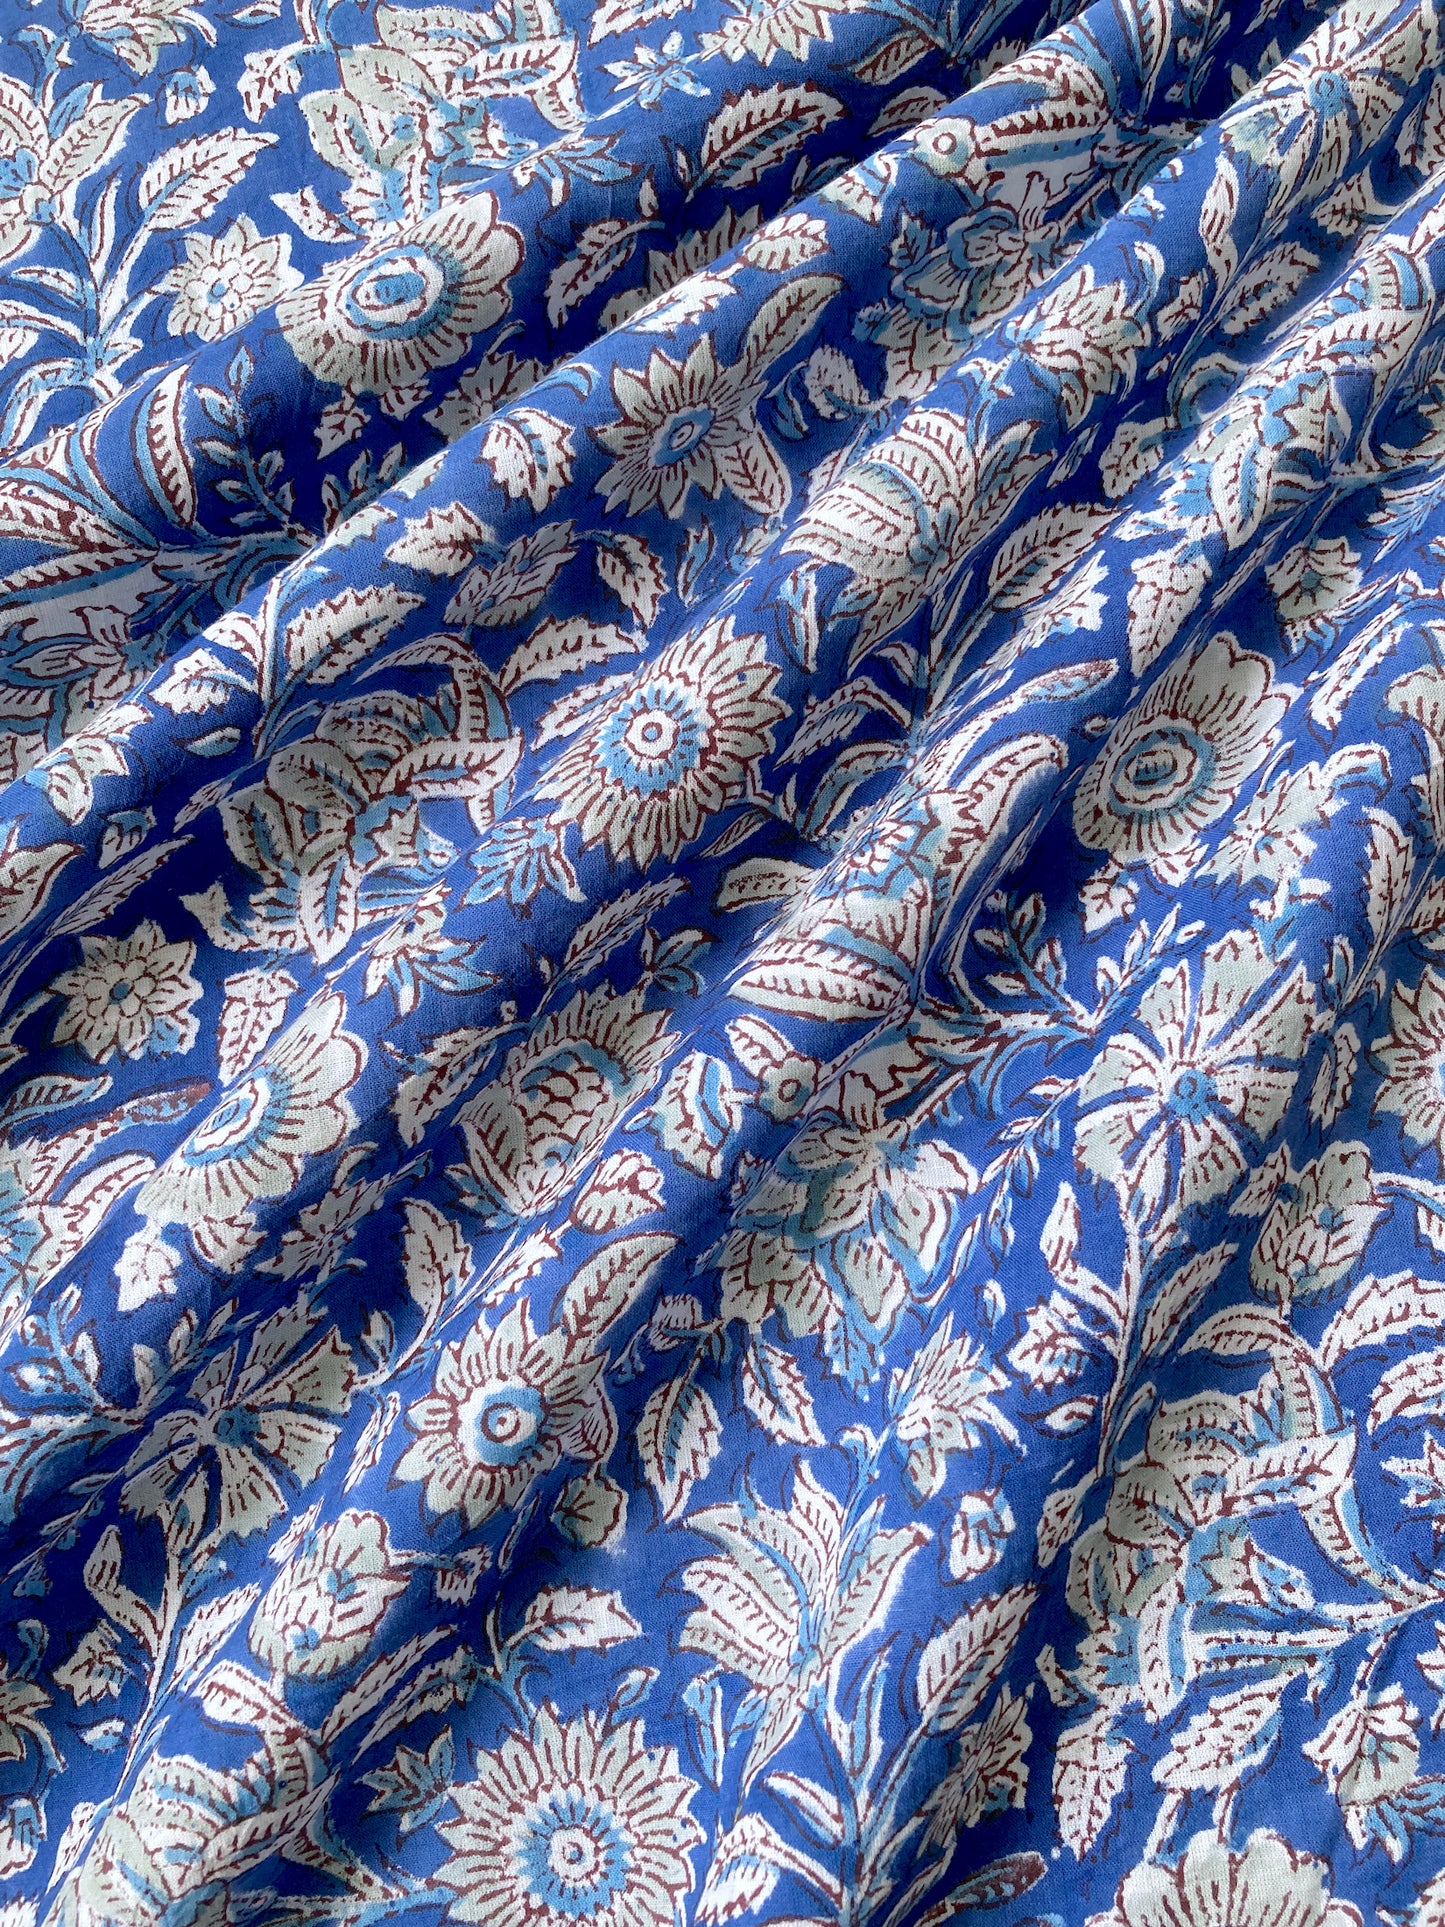 Hand Block Printed Cotton Fabric Blue #207-15